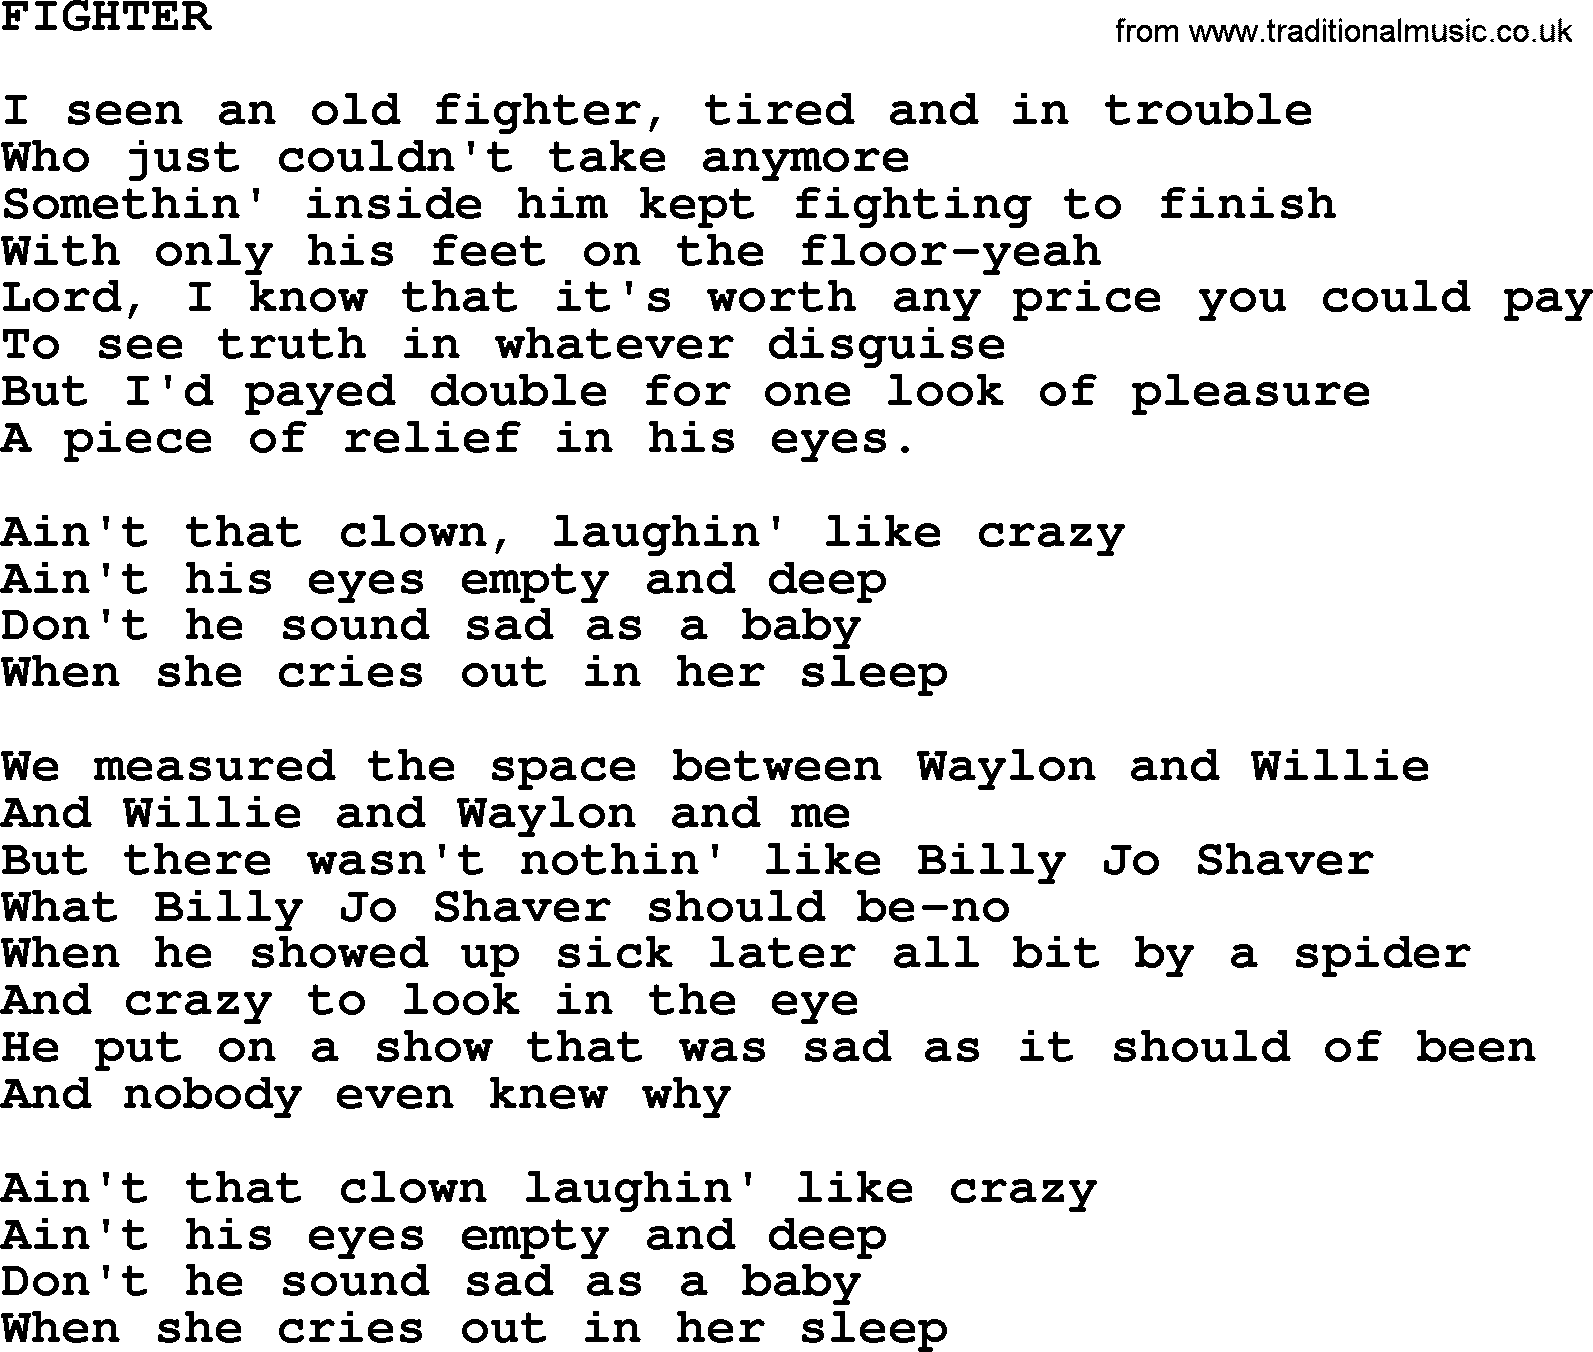 Kris Kristofferson song: Fighter lyrics